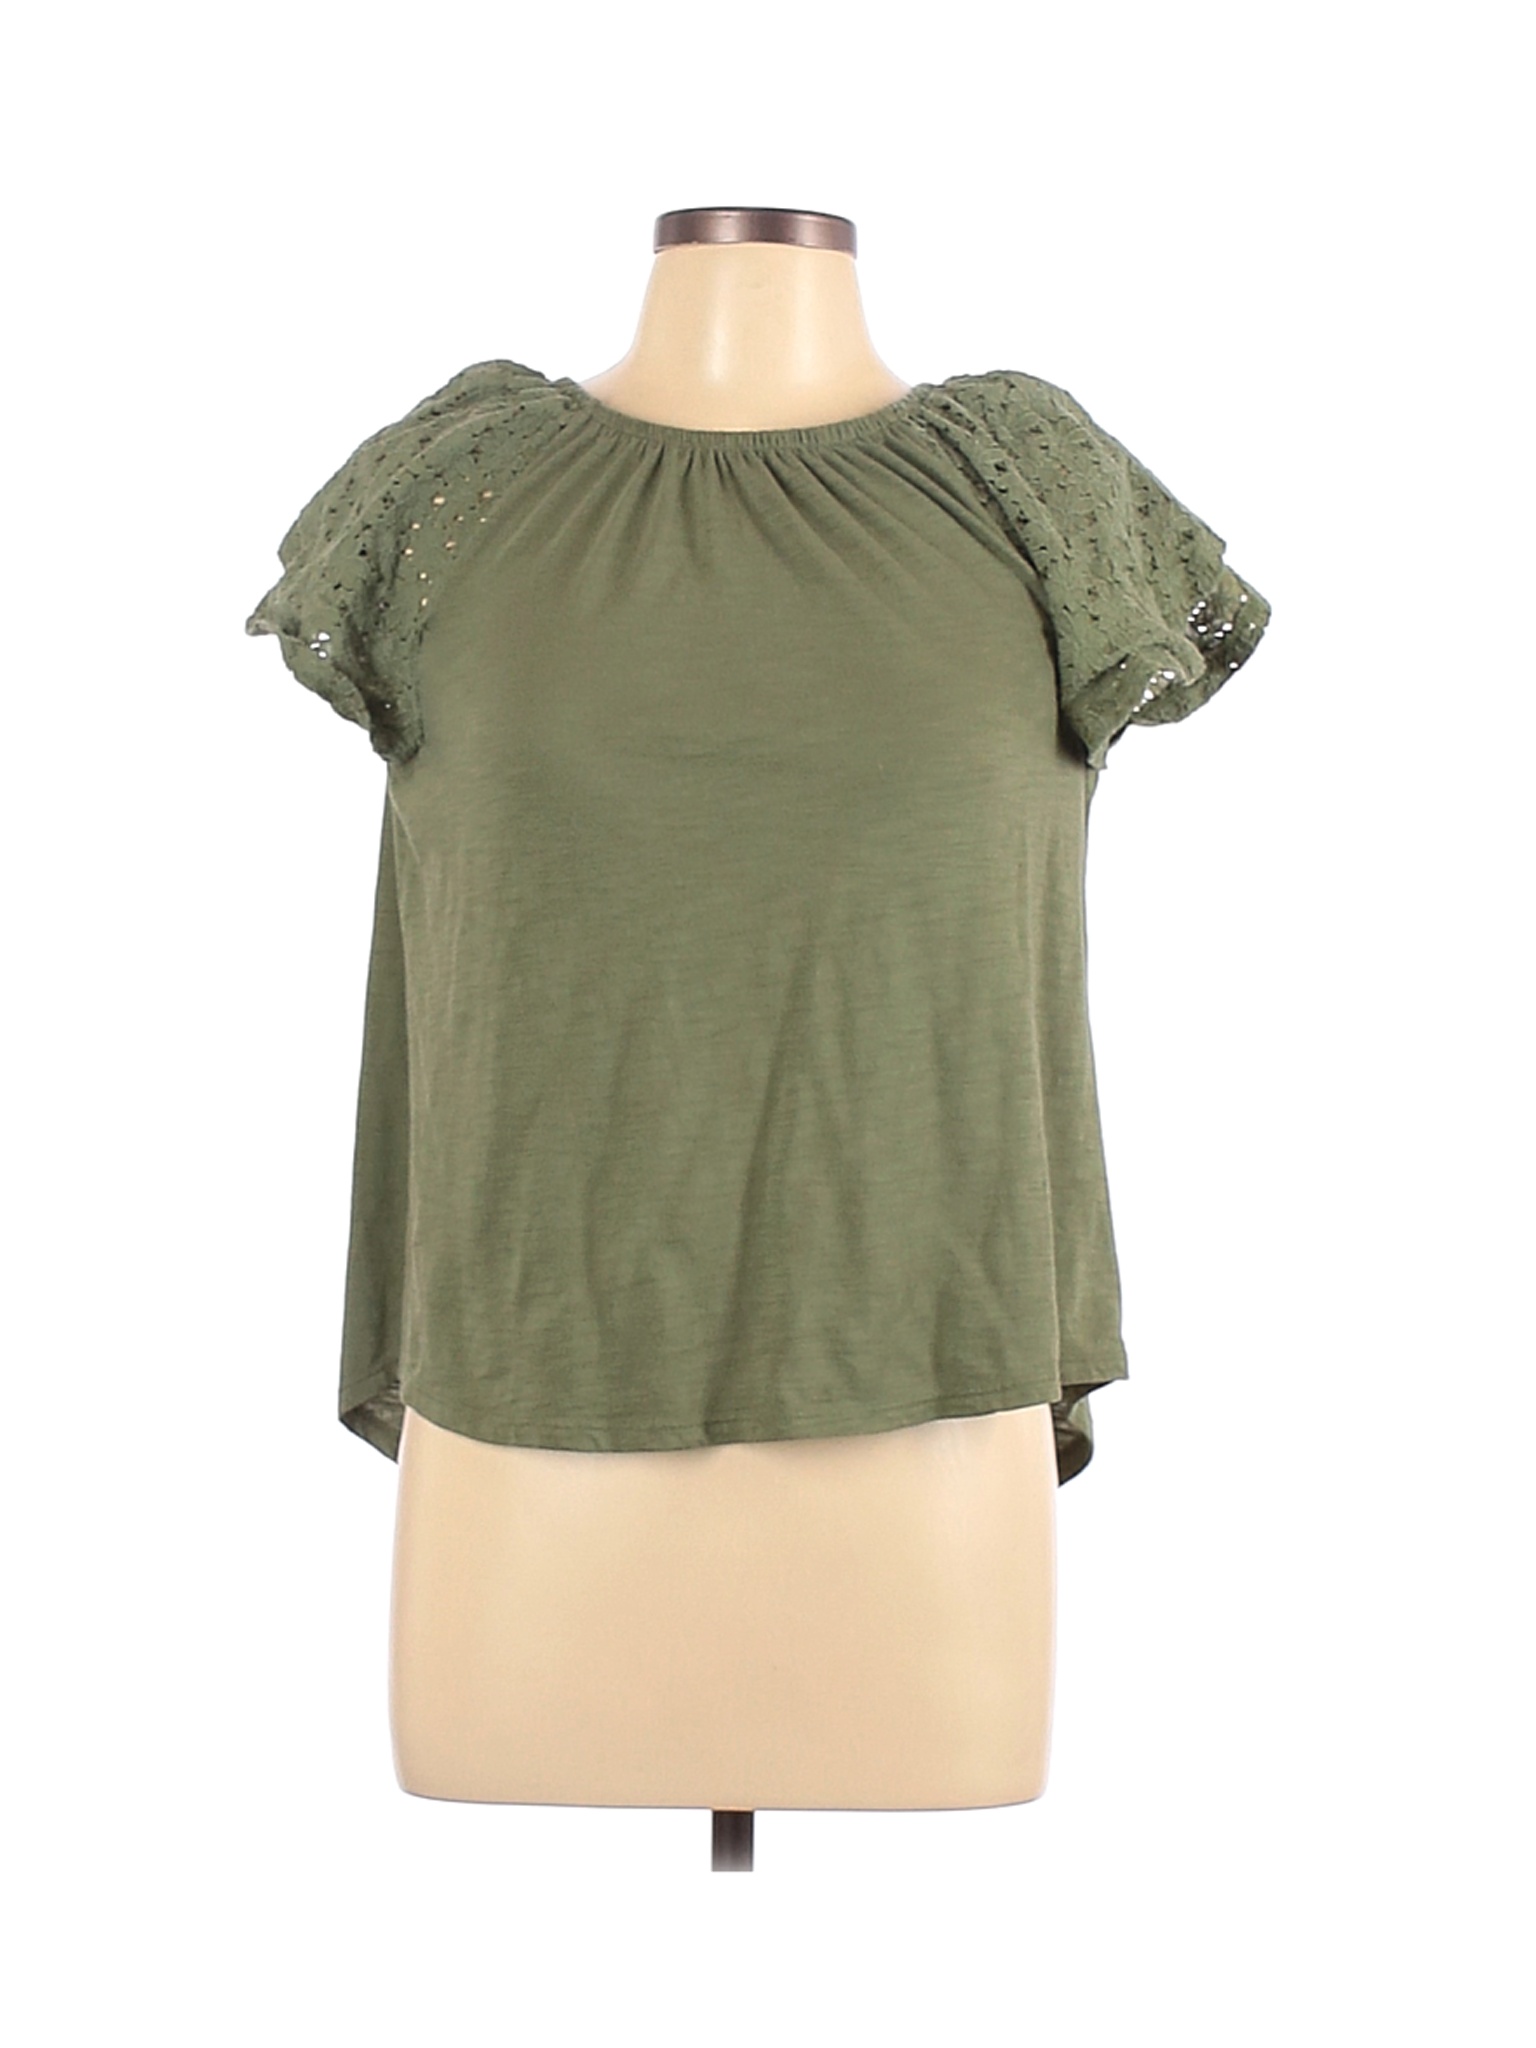 Old Navy Women Green Short Sleeve Top L | eBay